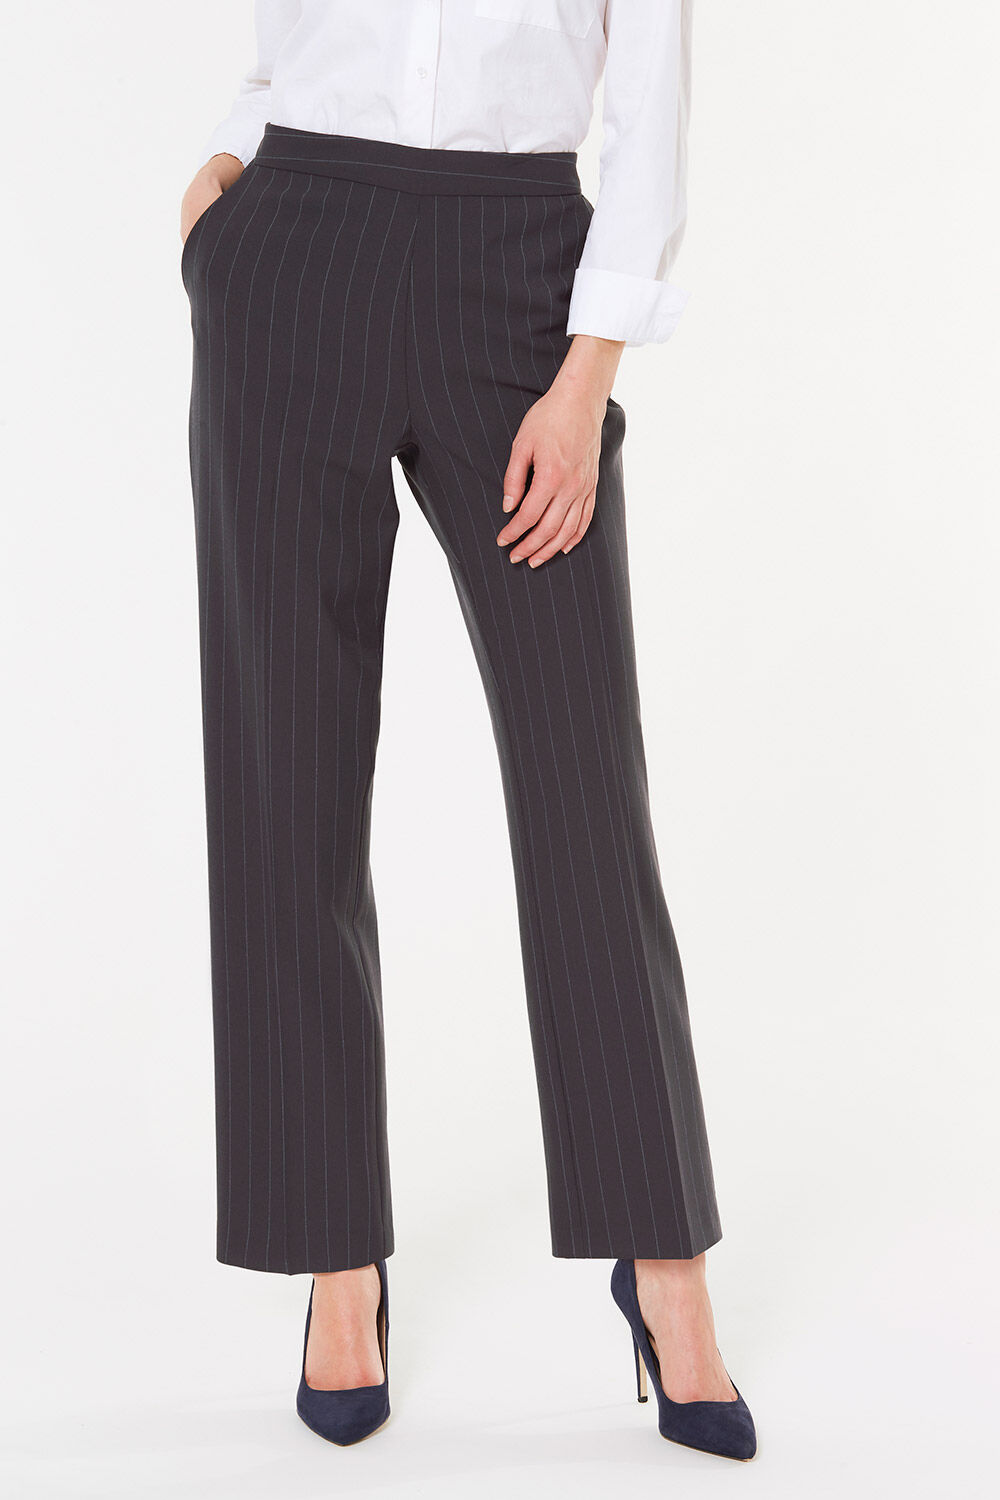 Bonmarche Workwear Classic Straight Leg Stripe Pull On Trouser - Navy, Size: 20